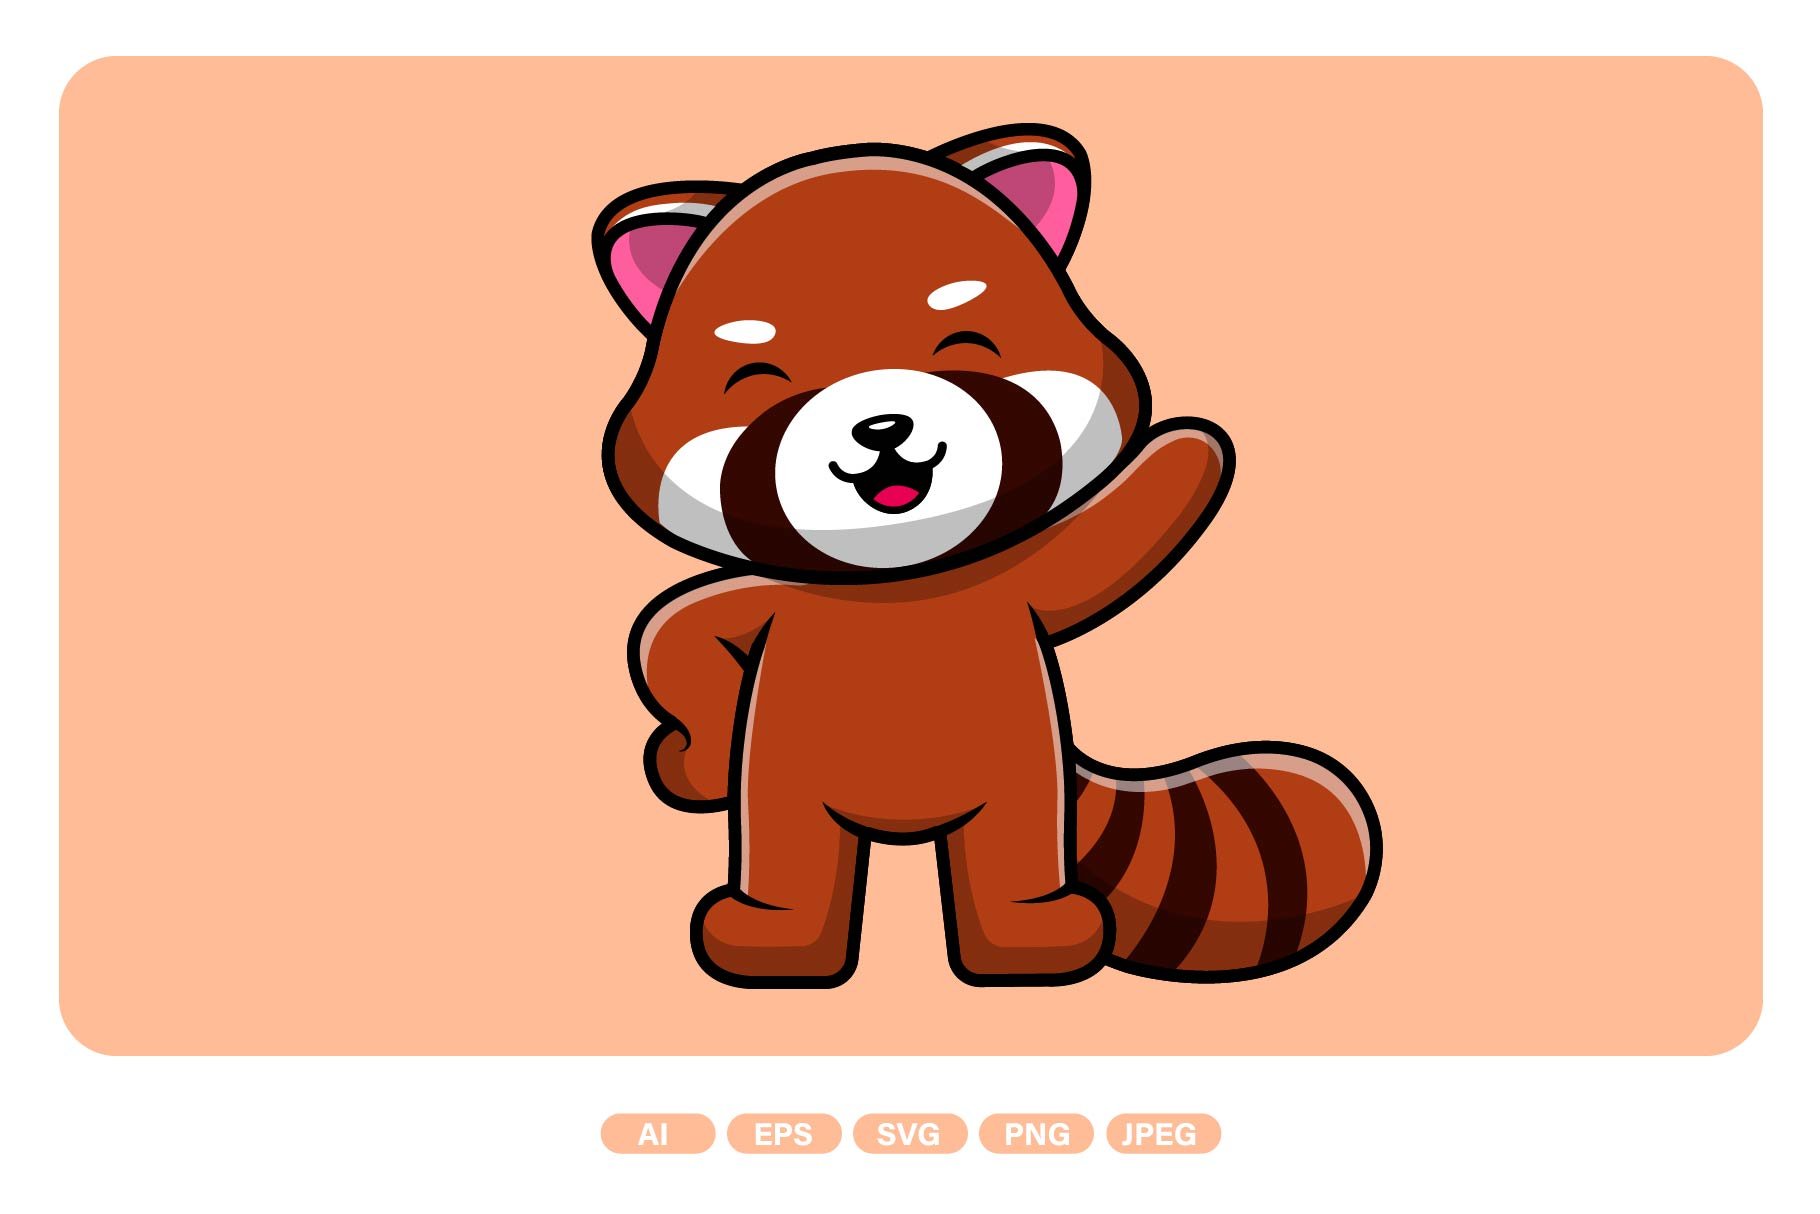 Cute Red Panda Waving Hand cover image.